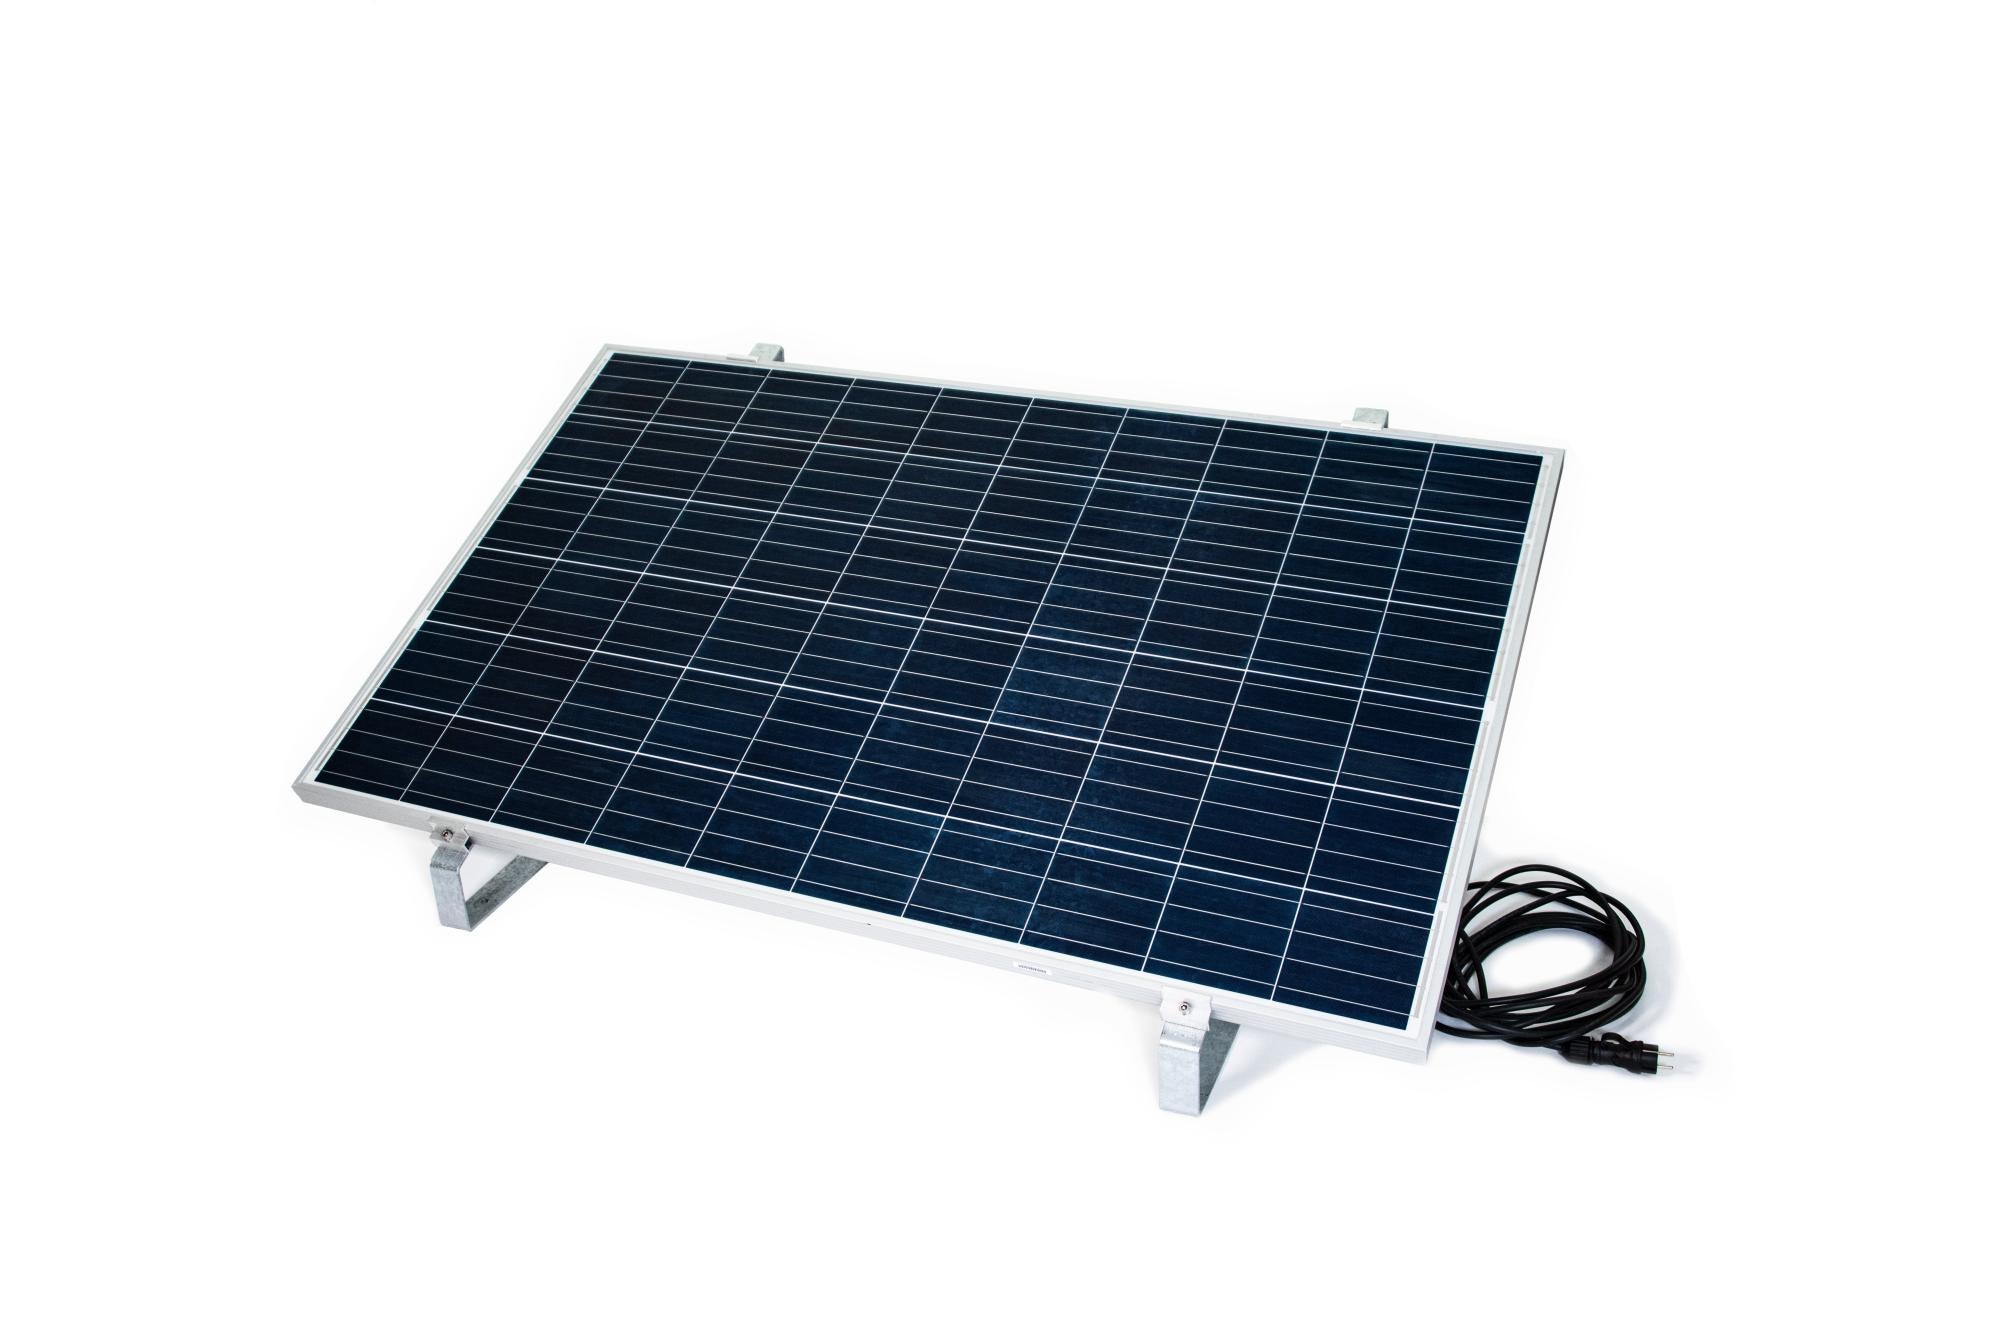 Prise solaire - Livraison gratuite Darty Max - Darty